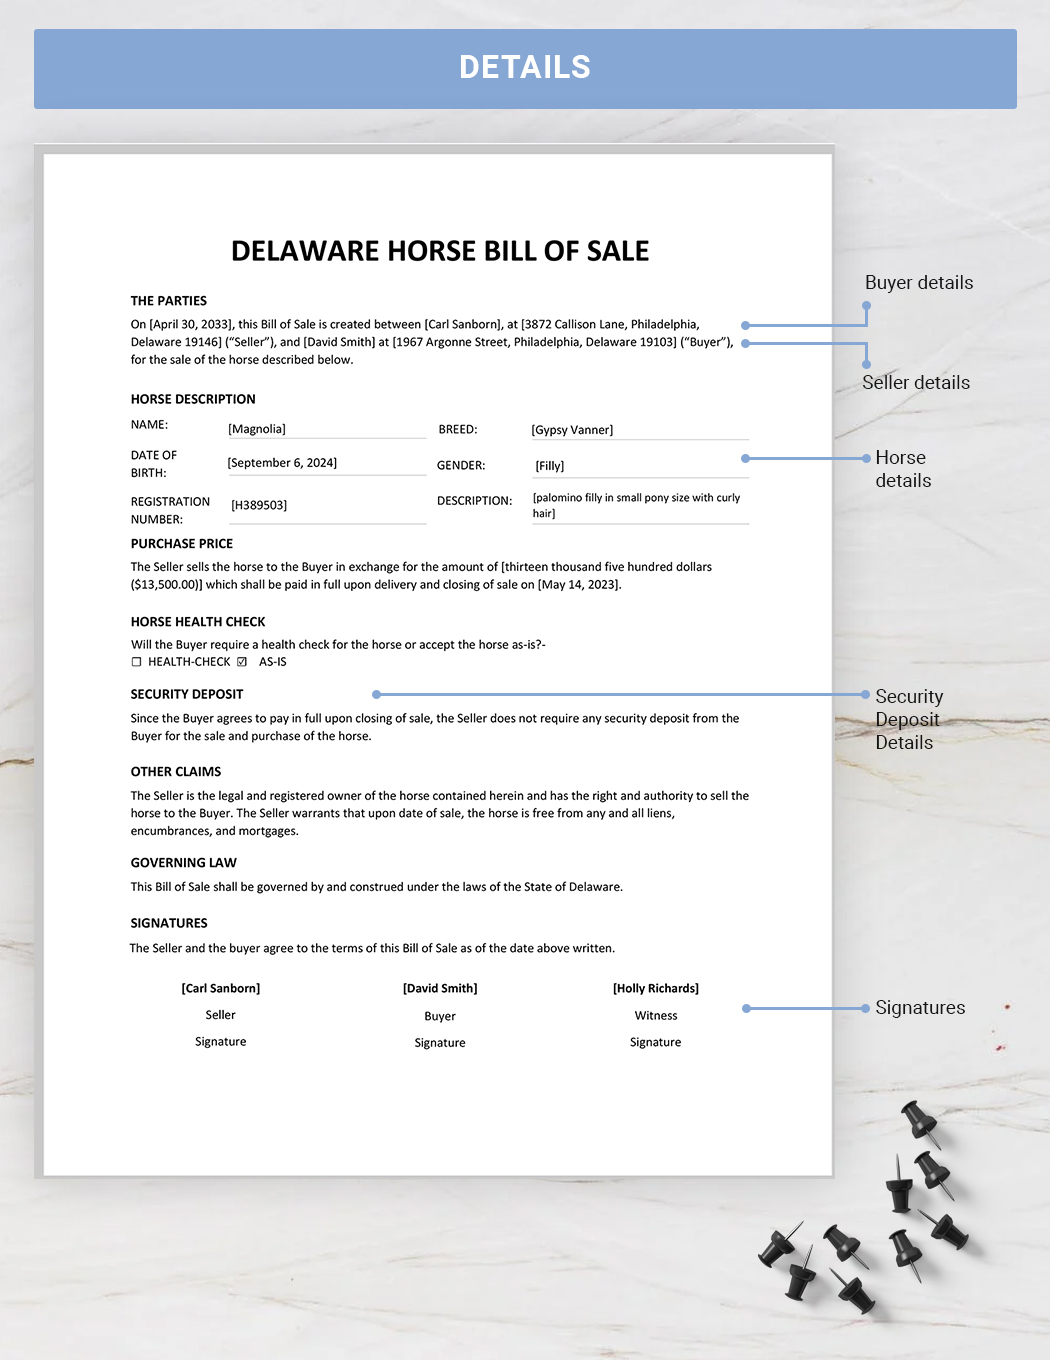 Delaware Horse Bill of Sale Template